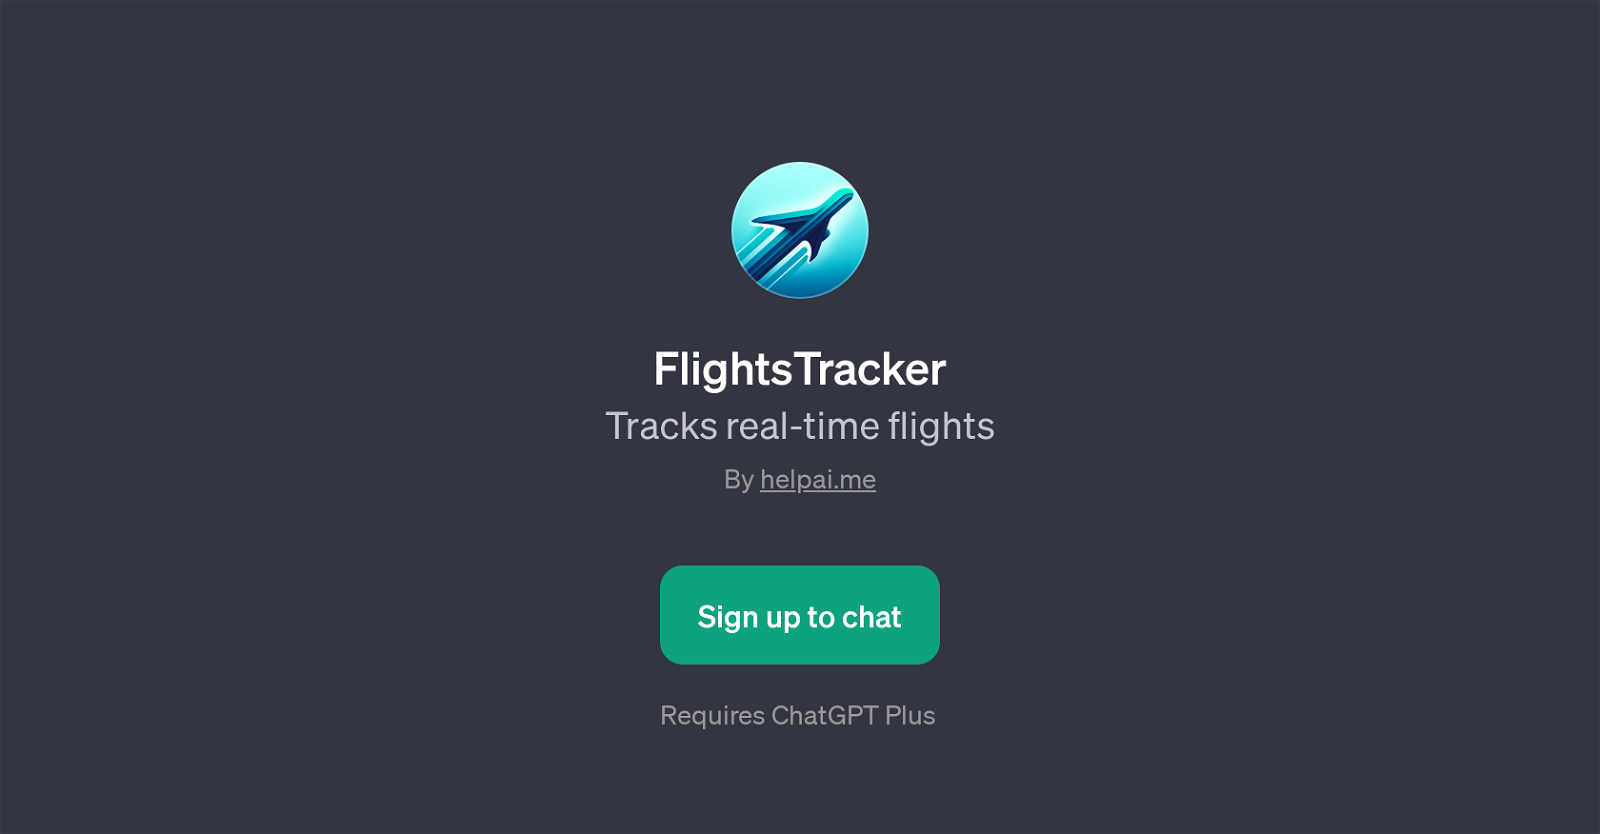 FlightsTracker website